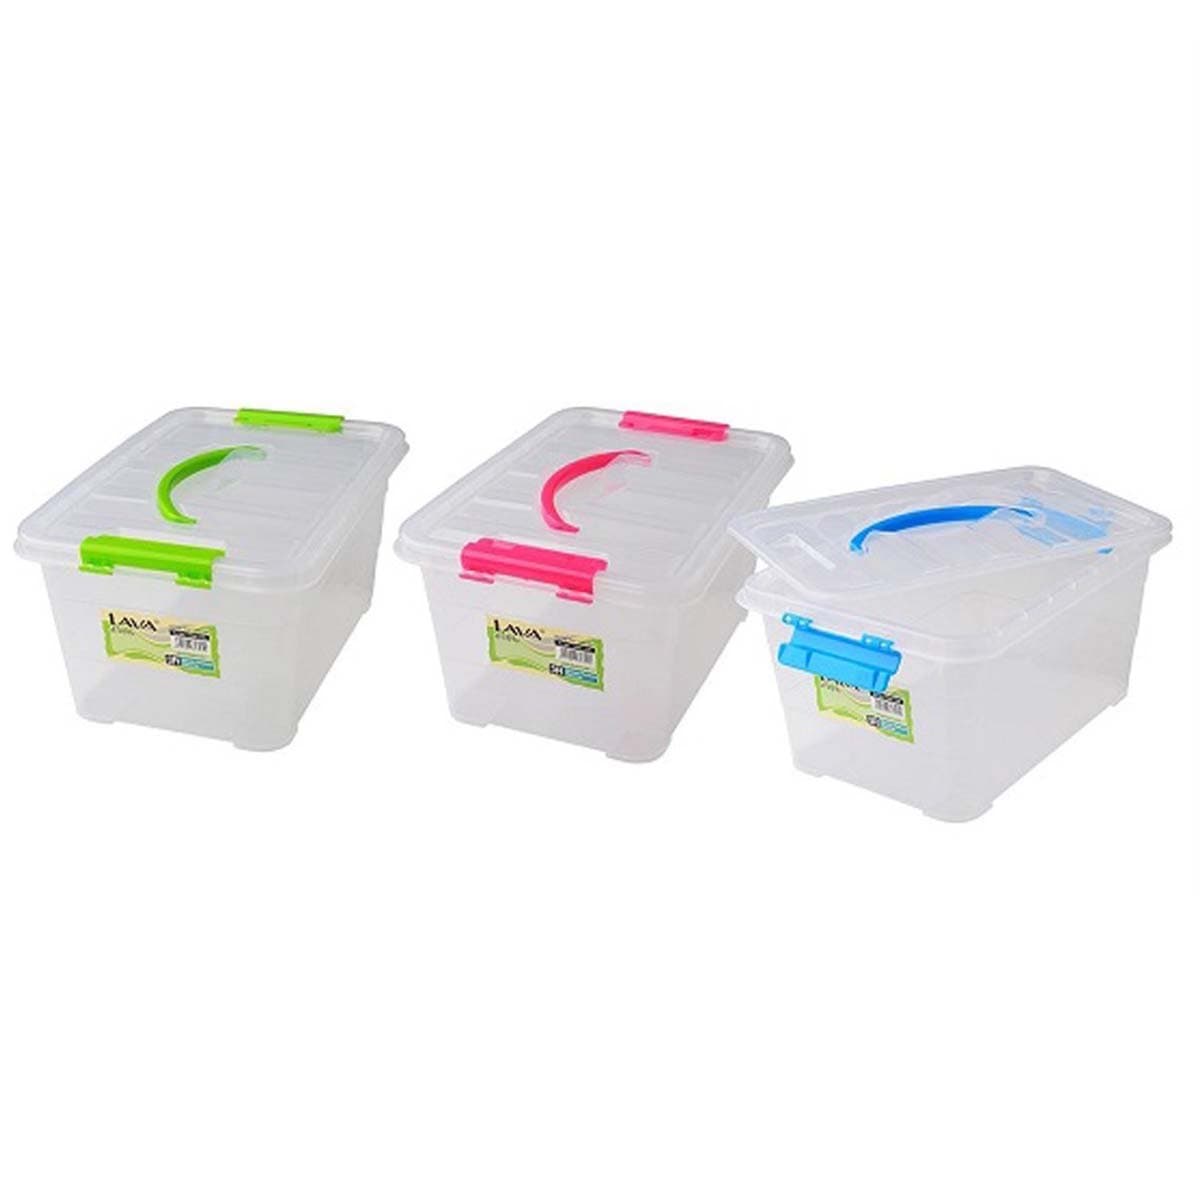 LBX782 LAVA Lunch Box (2 Comp) 1.9L - Aneka Home Essentials